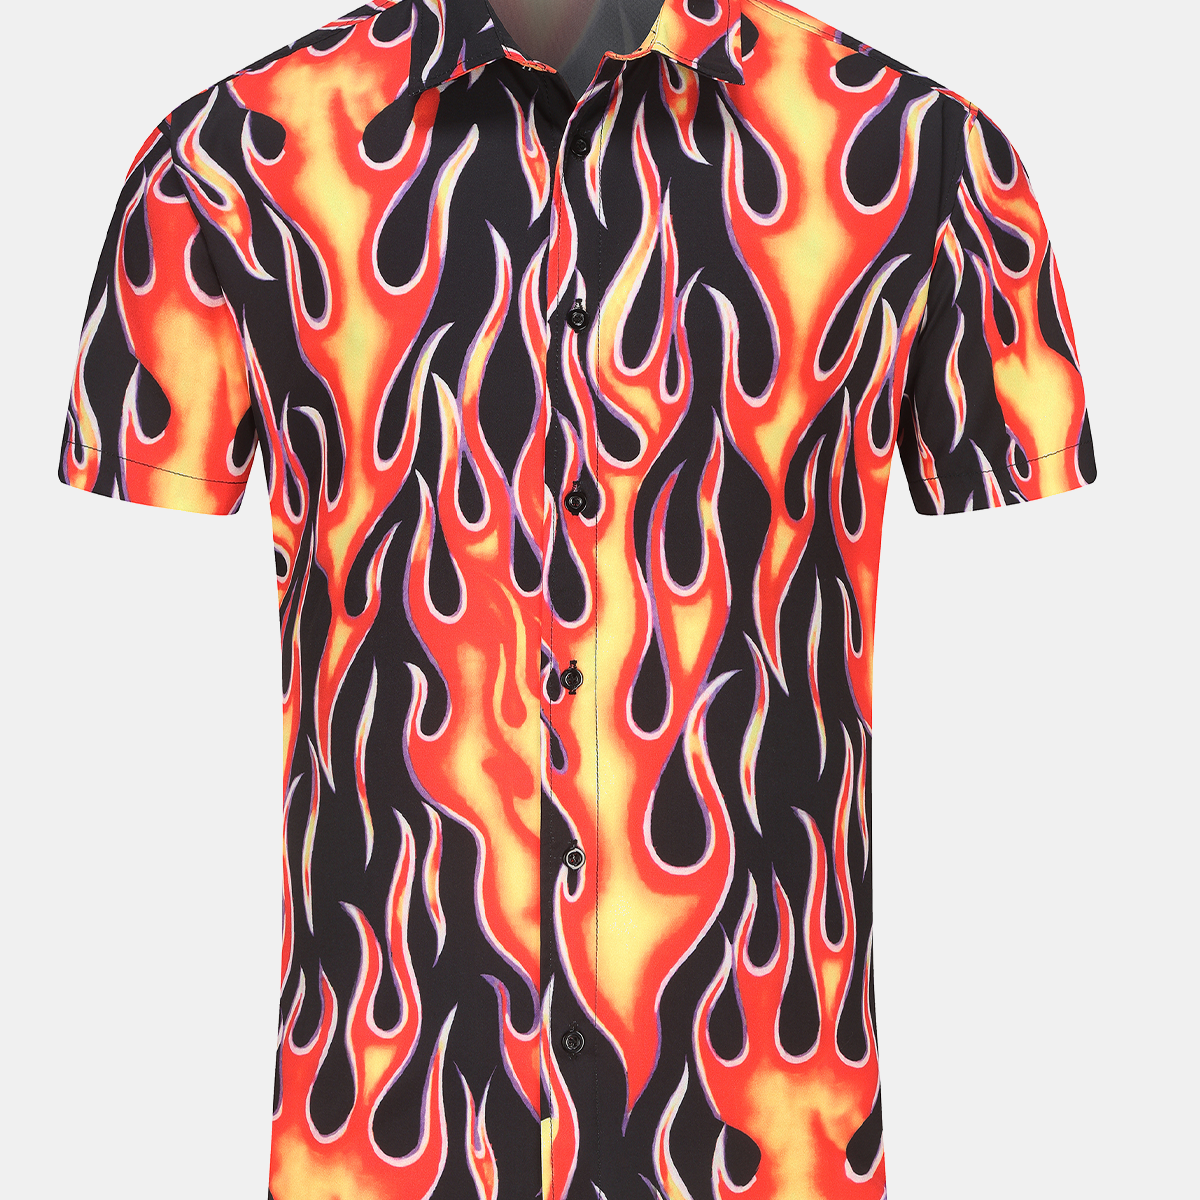 Men's Fire Print Summer Cool Casual Funny Short Sleeve Shirt